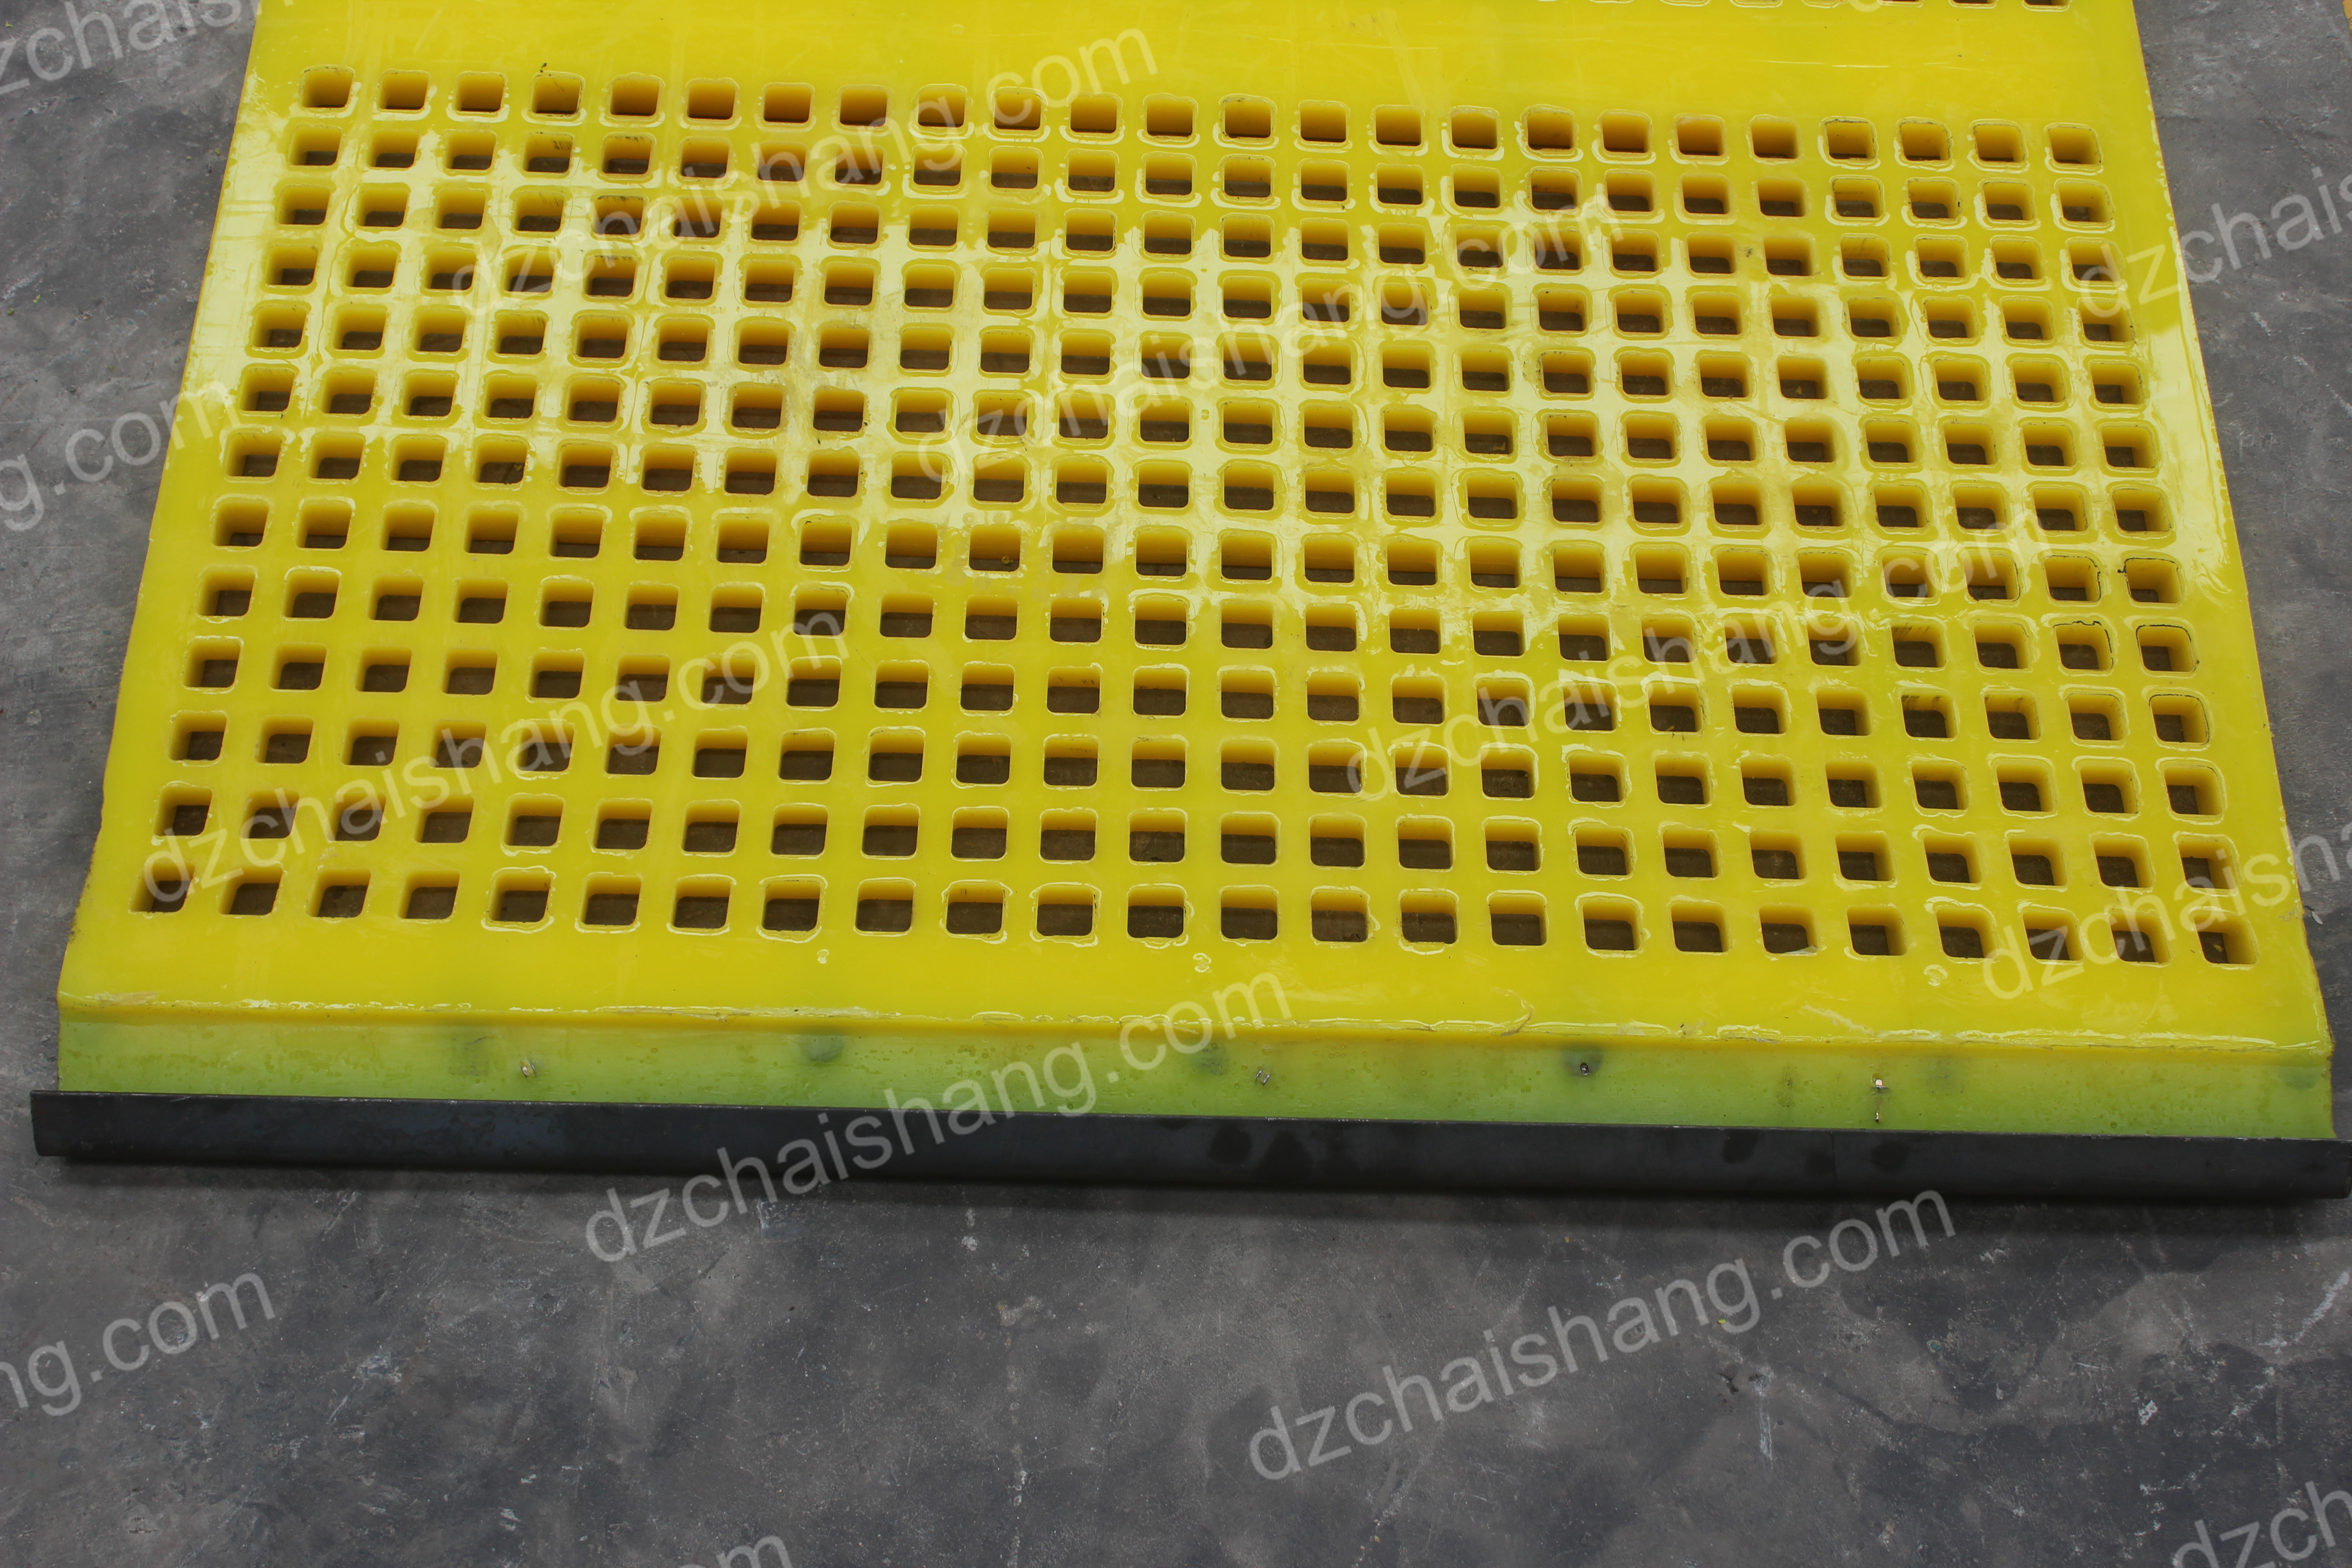 Cheap fine Polyurethane plate Mining,vibrating fine Polyurethane plate Producer-CHAISHANG | Polyurethane Screen,Rubber Screen PanelsHigh frequency screen mesh,Belt Cleaner,Flotation Cell